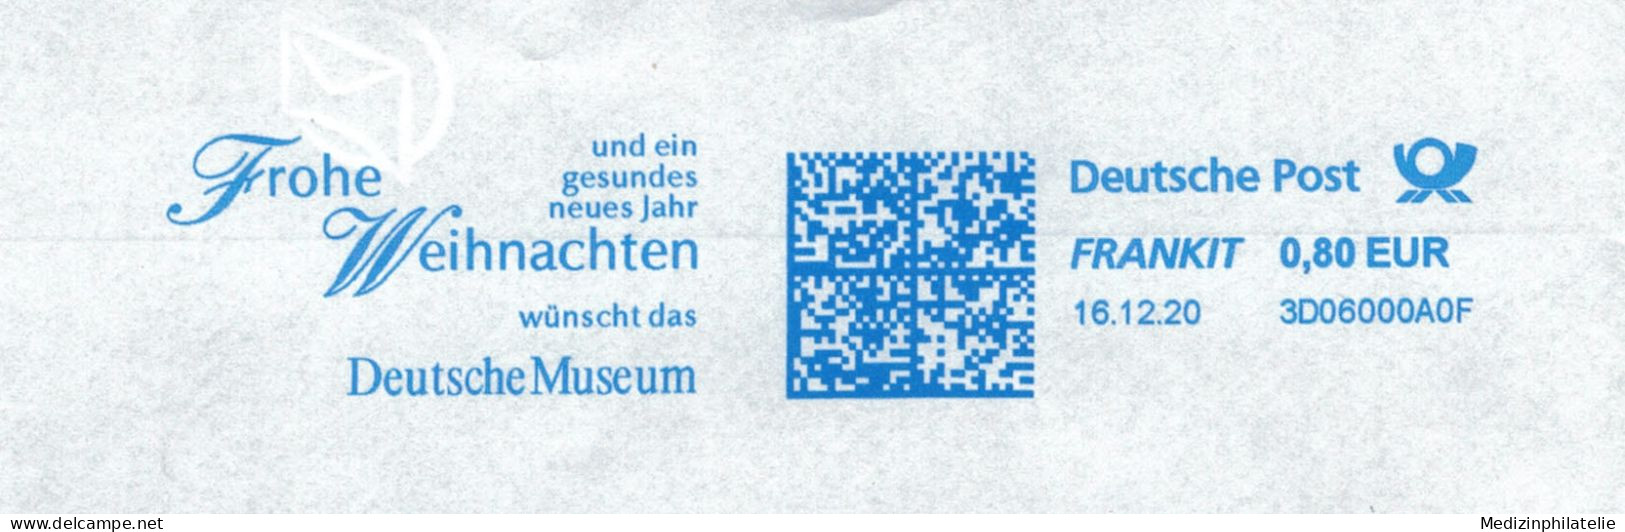 Frohe Weihnacht Wünscht Deutsches Museum  2020 - Musea